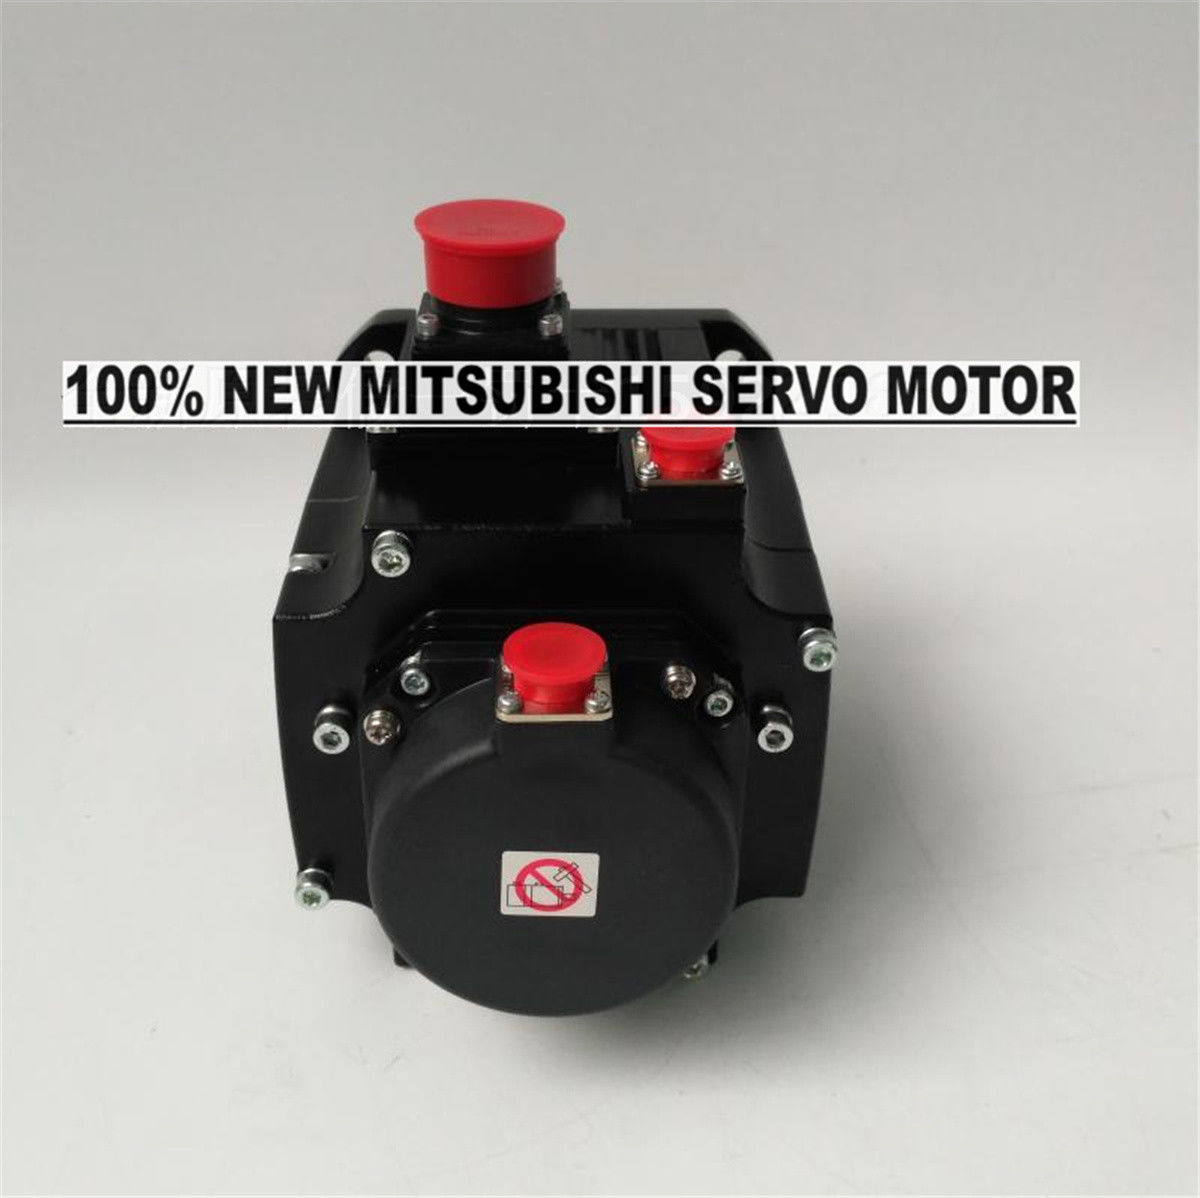 NEW Mitsubishi Servo Motor HG-SR152BJ in box HGSR152BJ - zum Schließen ins Bild klicken